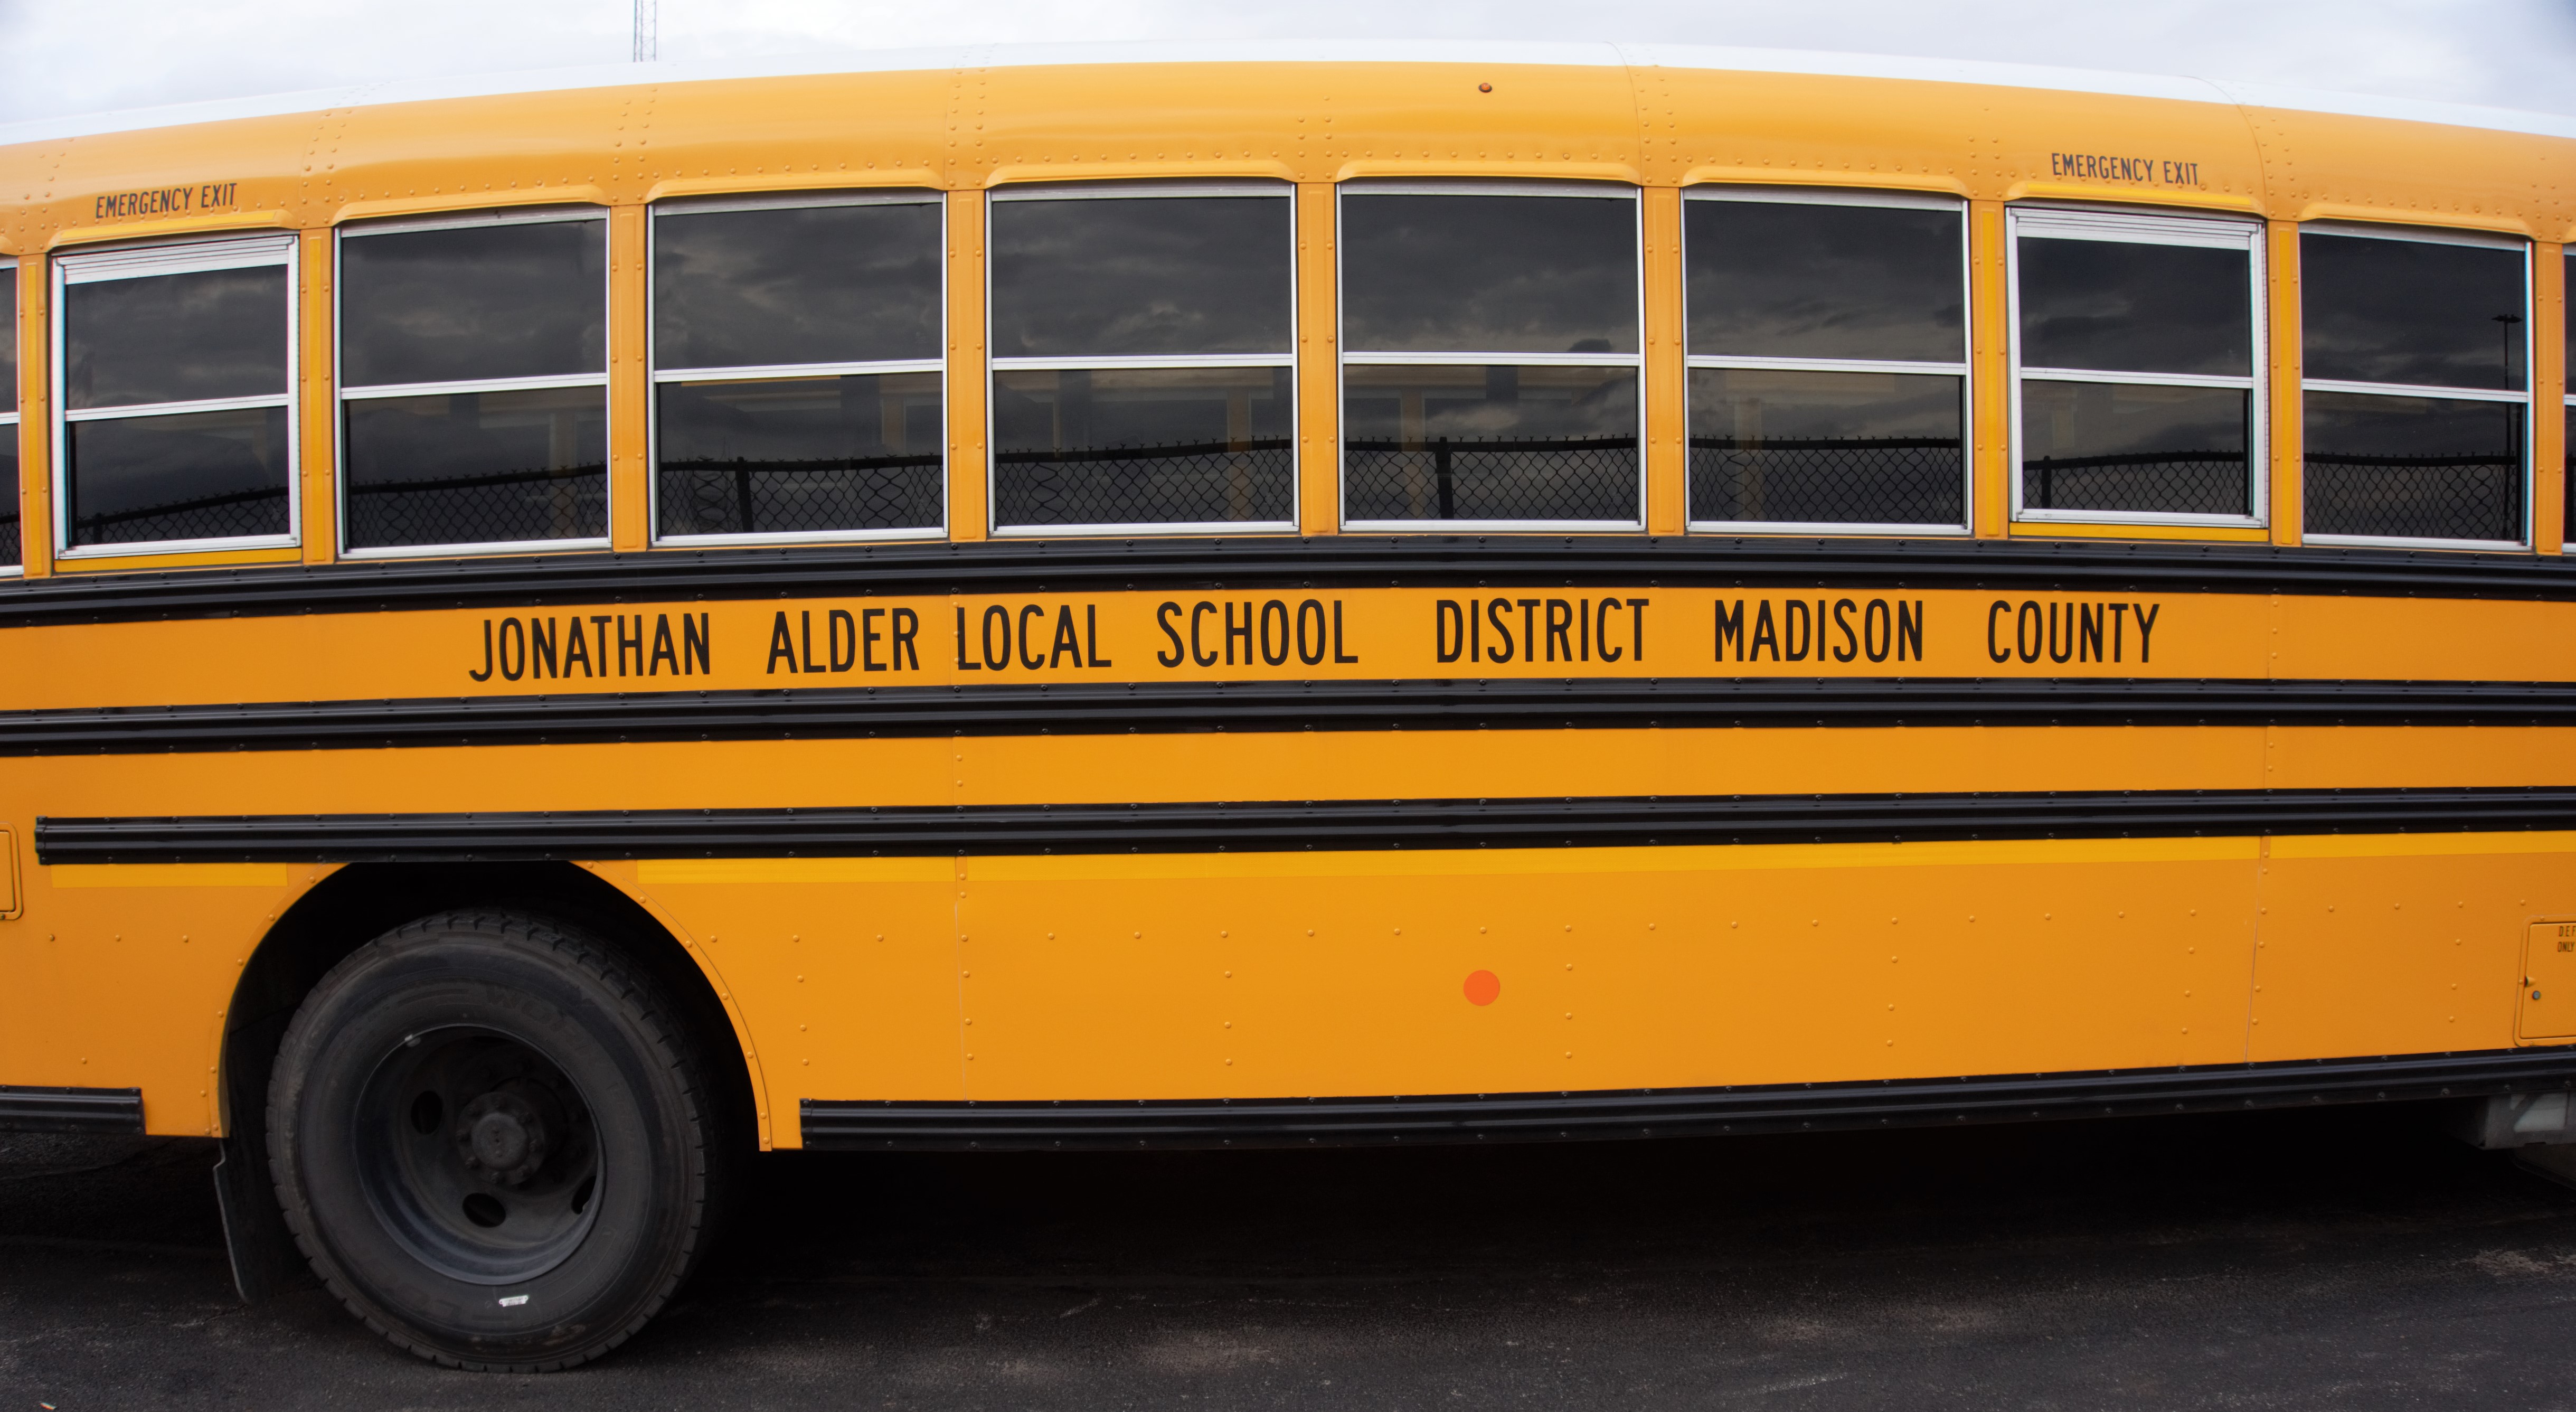 school bus that says "Jonathan Alder Local School District Madison County"